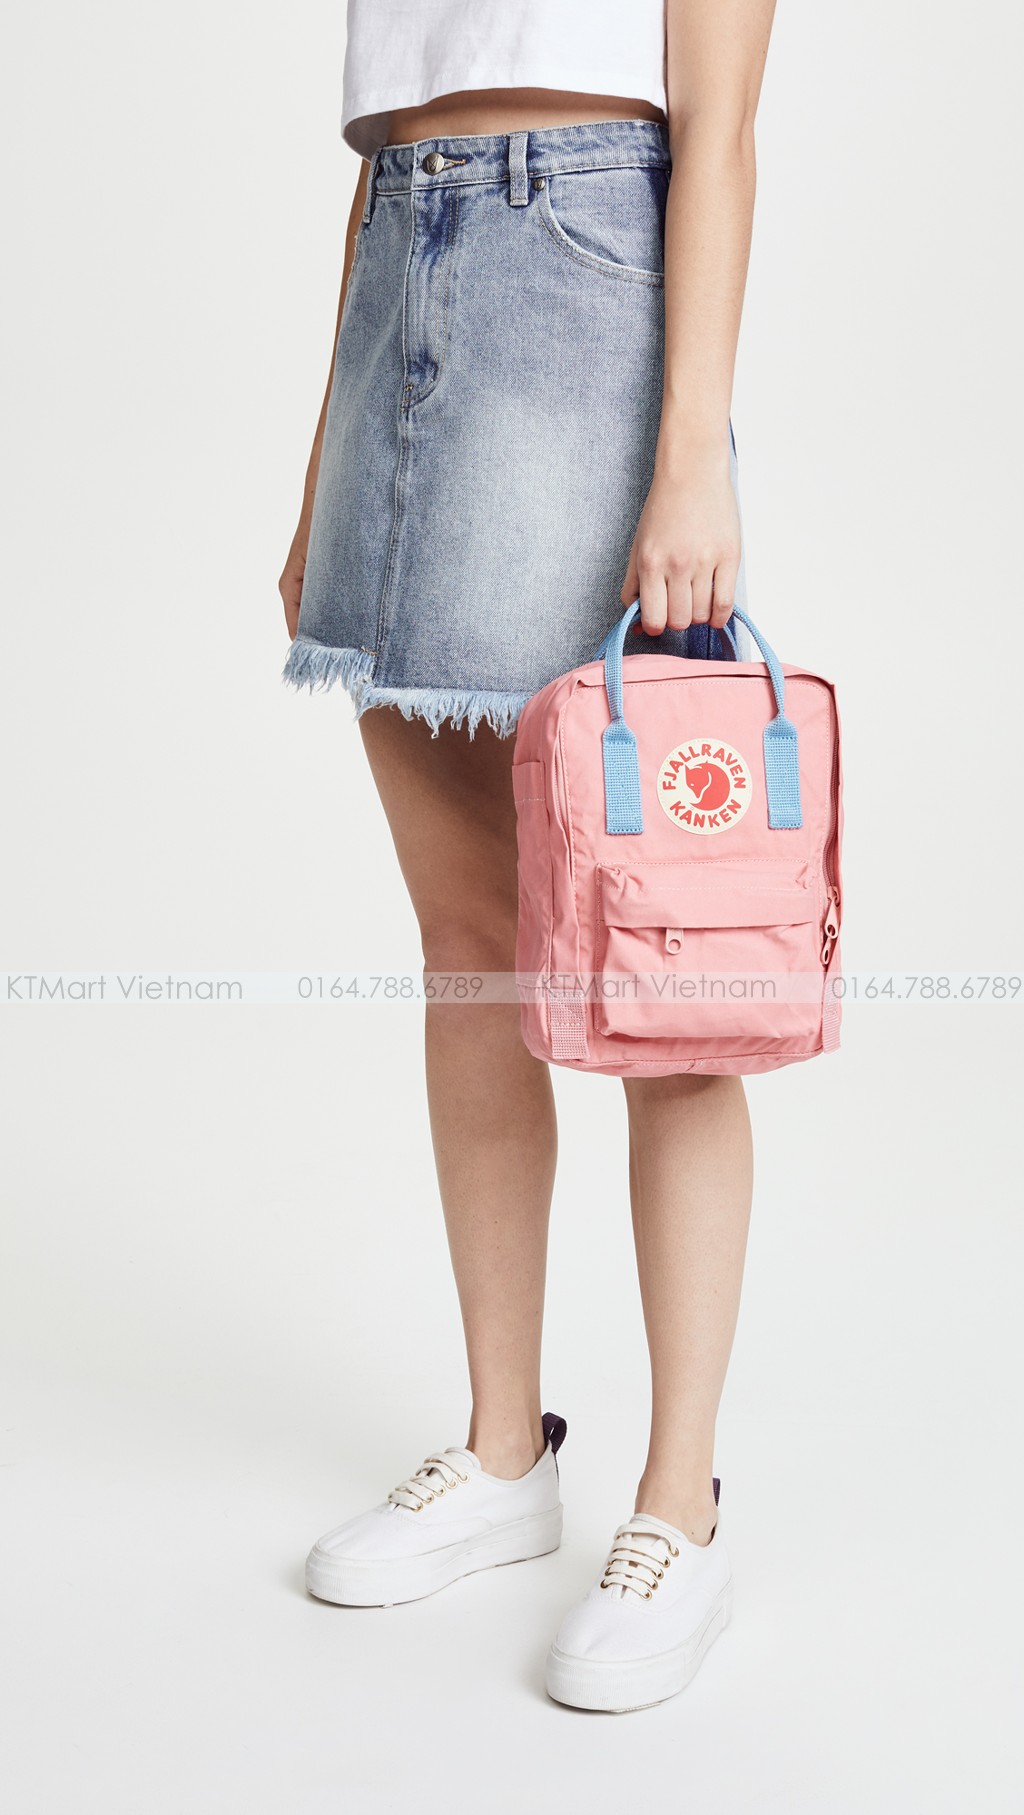 FjallRaven Kanken Mini Kids Backpack Pink Royal-Blue Fjallraven ktmart.vn 4